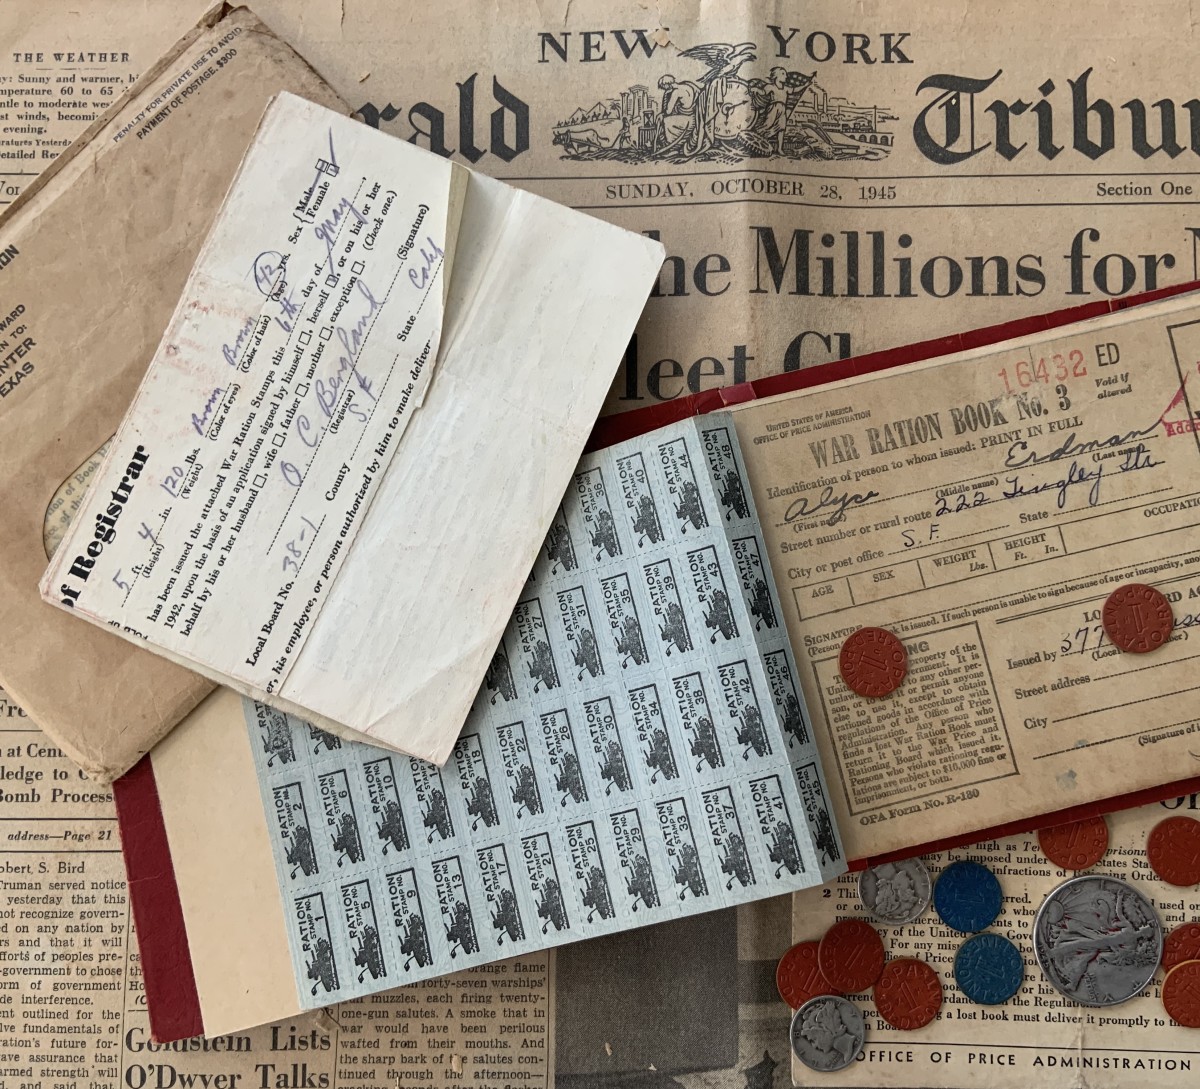 OPA Tokens and World War II Rationing Memorabilia